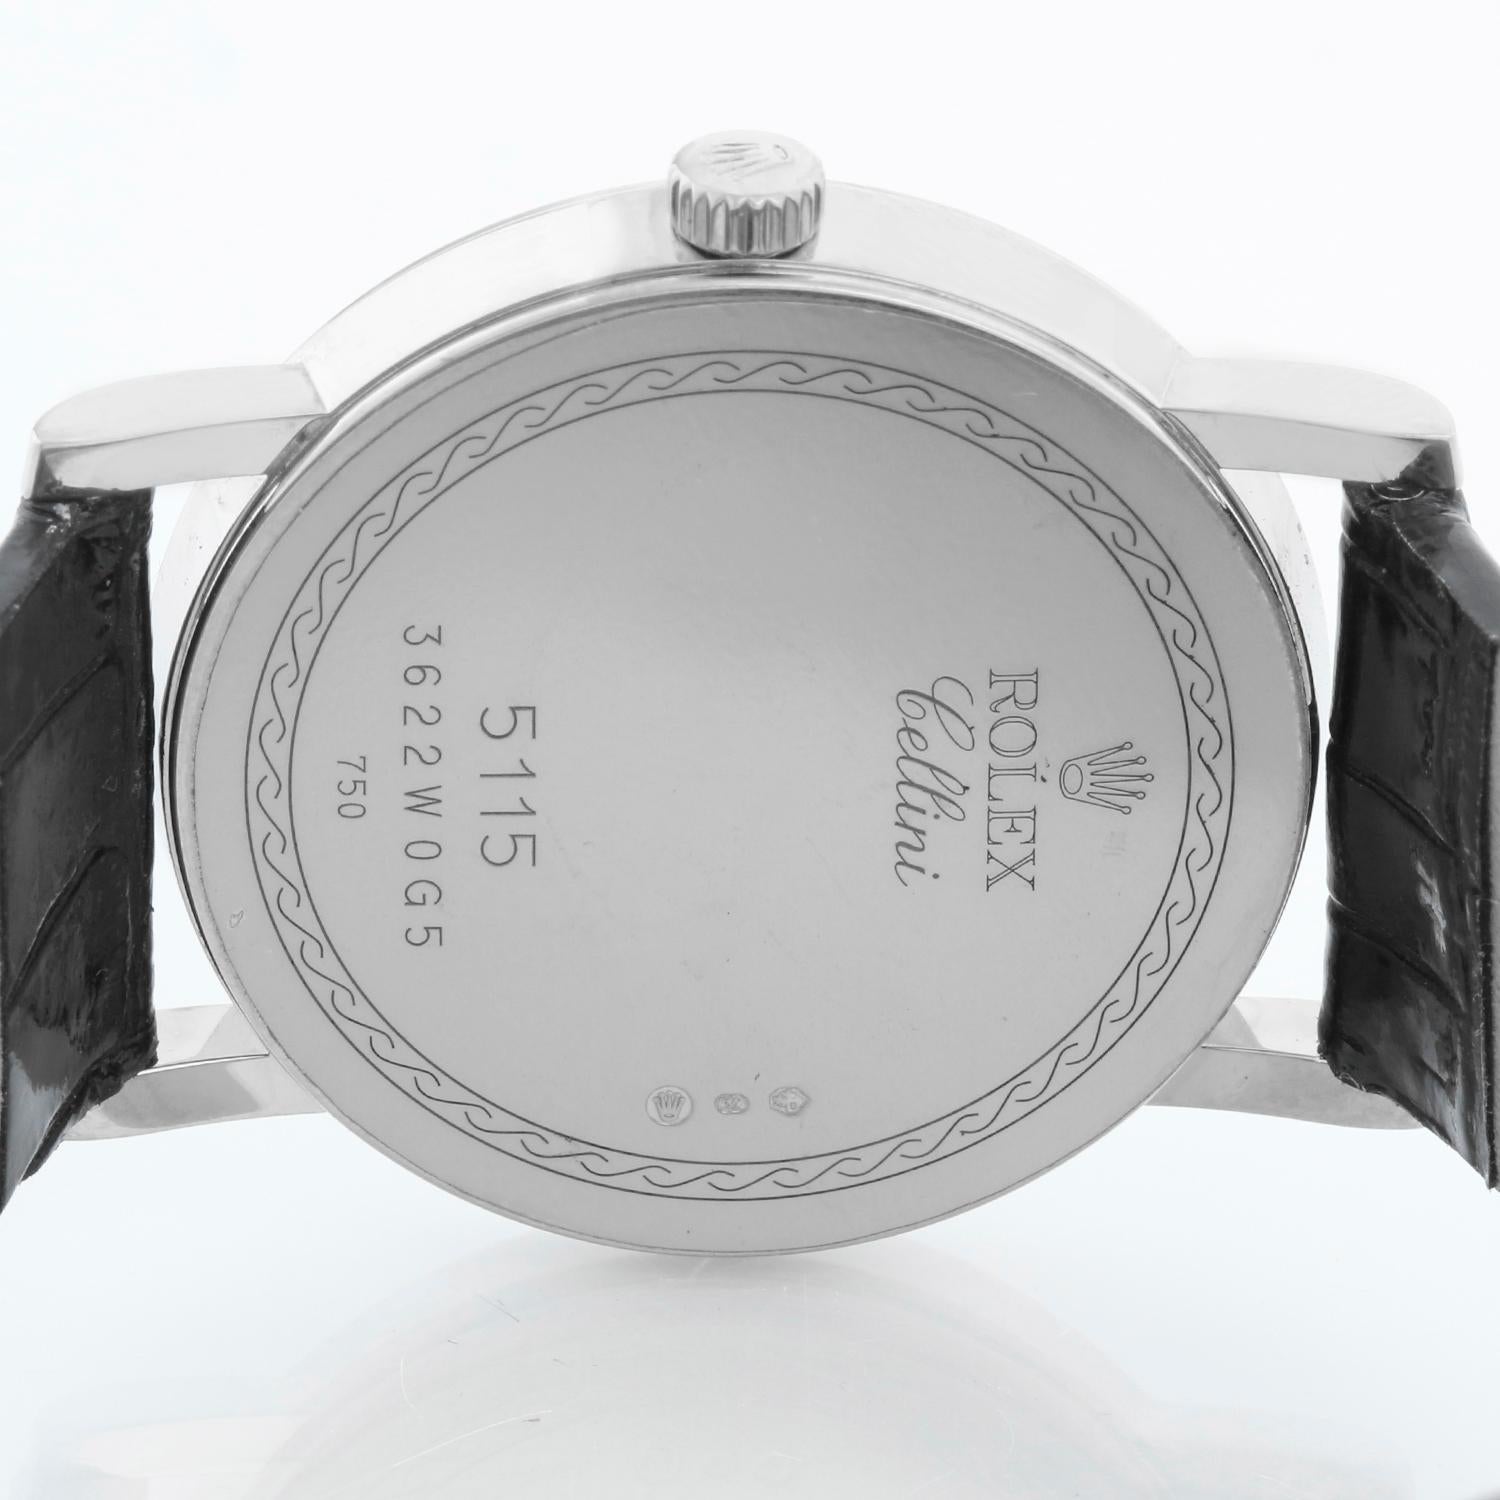 Rolex Cellini Classic 18k White Gold Men's Watch 5115 In Excellent Condition For Sale In Dallas, TX